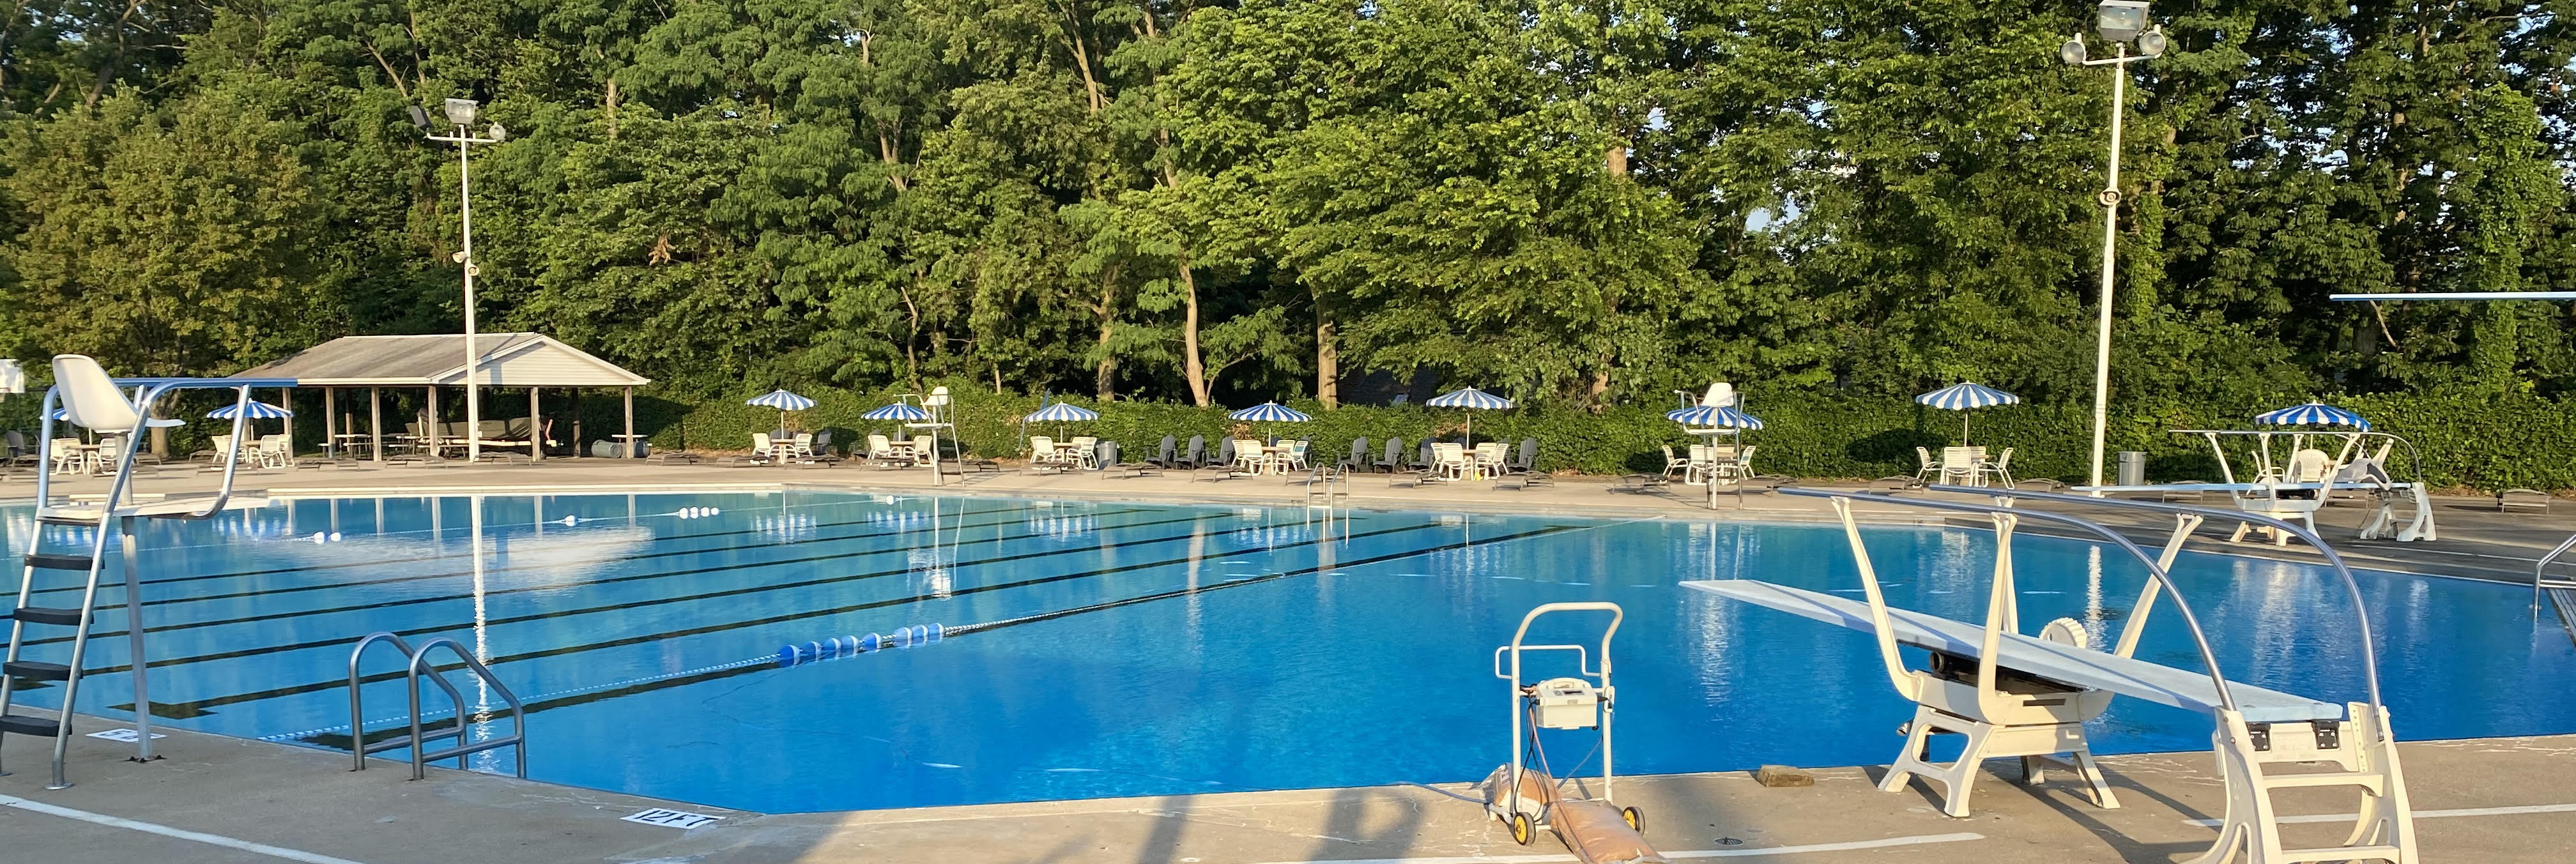 Beechwood Swim Club pool